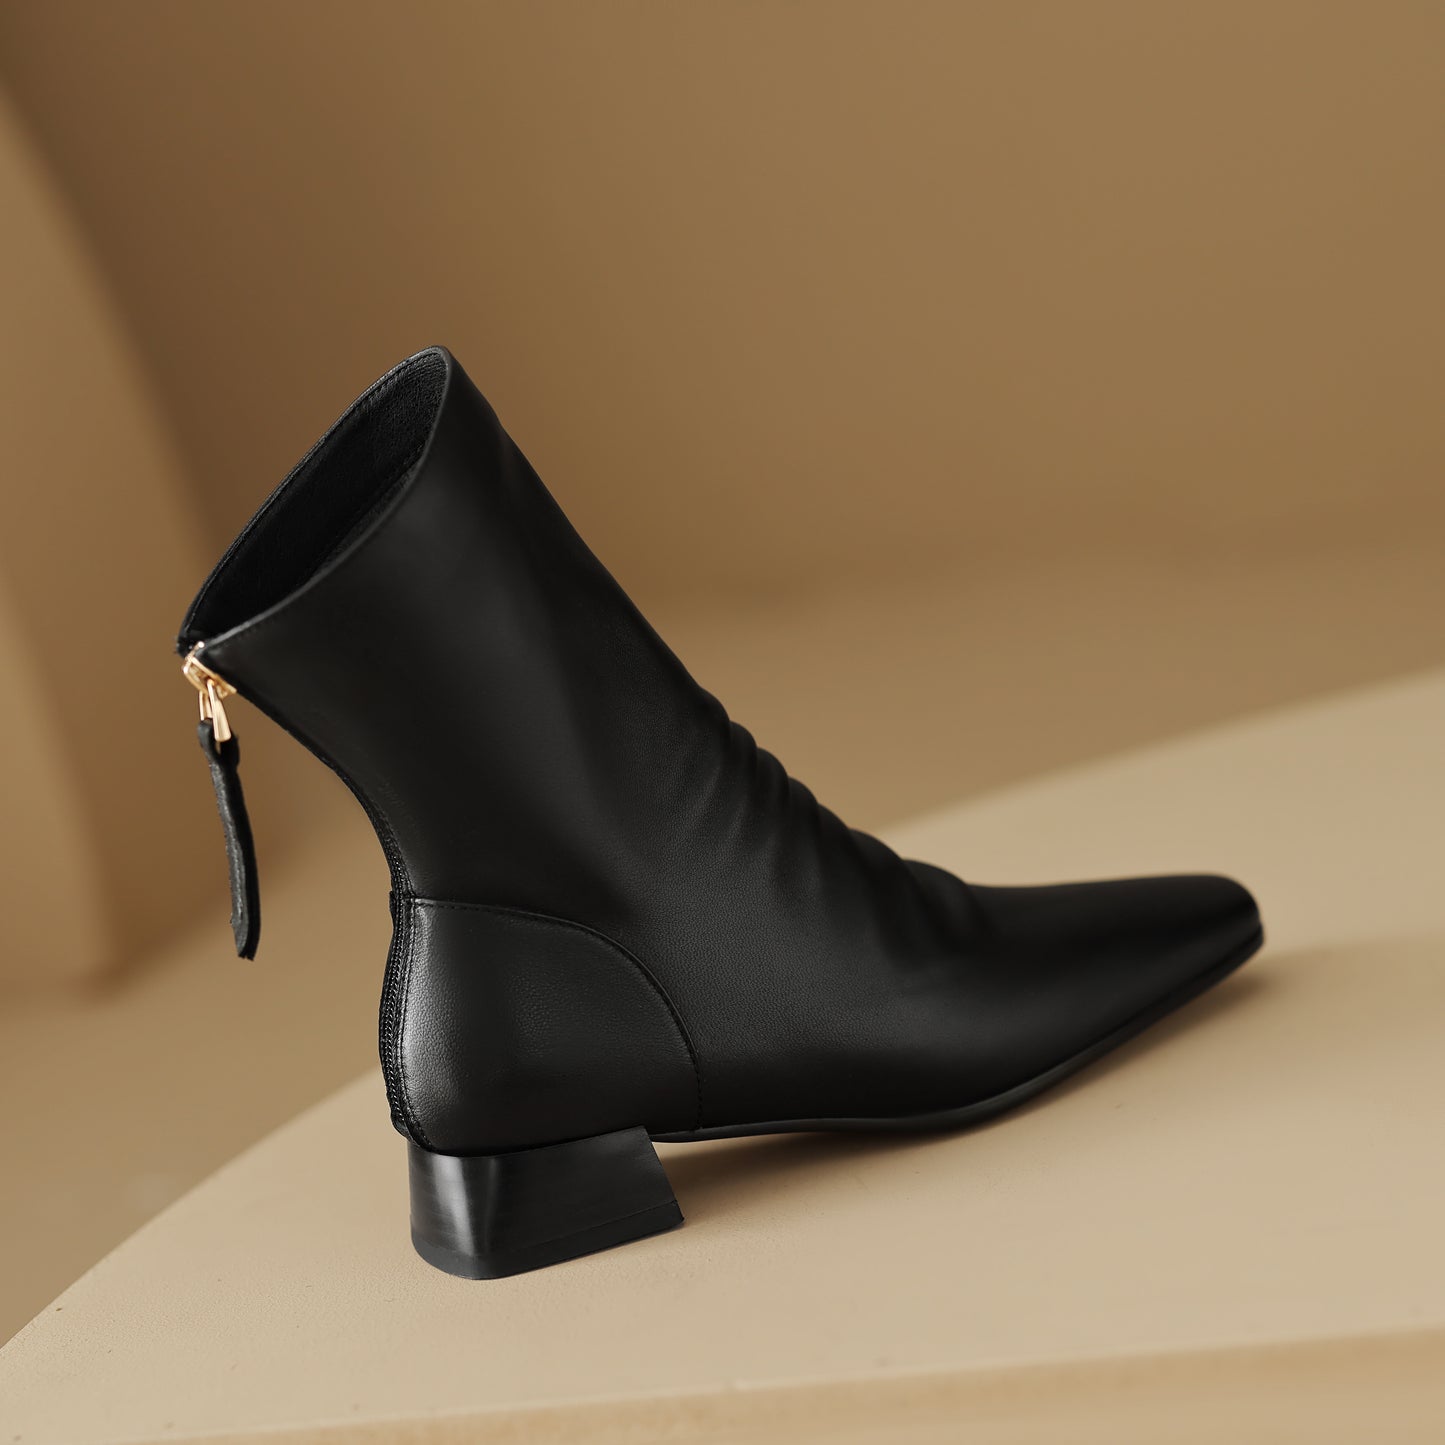 TinaCus Women's Genuine Leather Handmade Block Heel Zip Up Littele Square Toe Ankle Boots